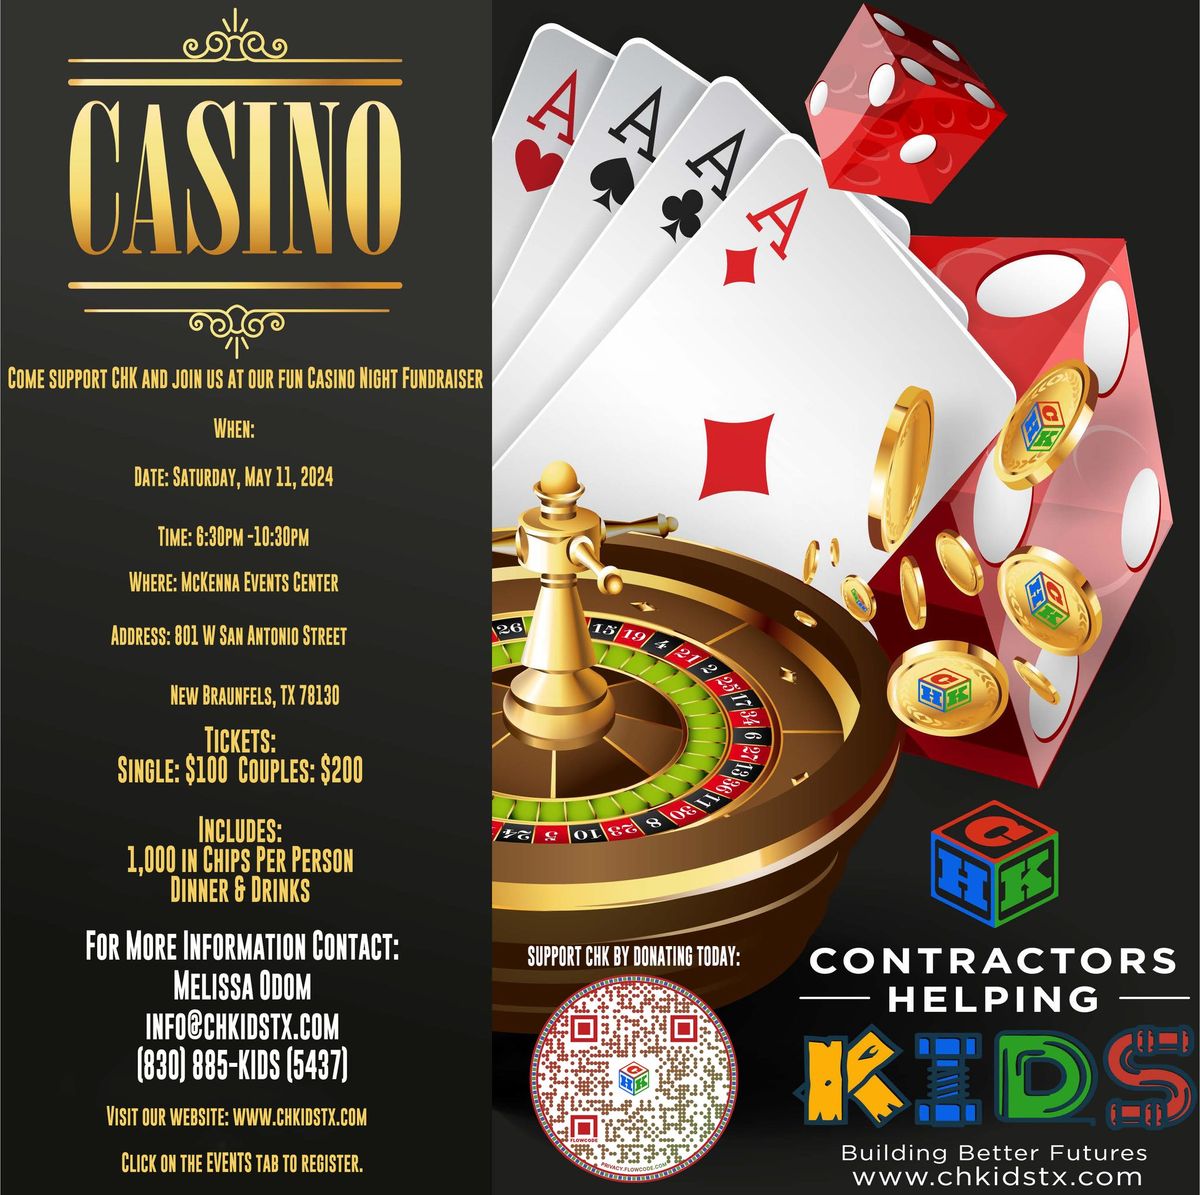 Contractors Helping Kids (Non-Profit) Casino Night Fundraiser